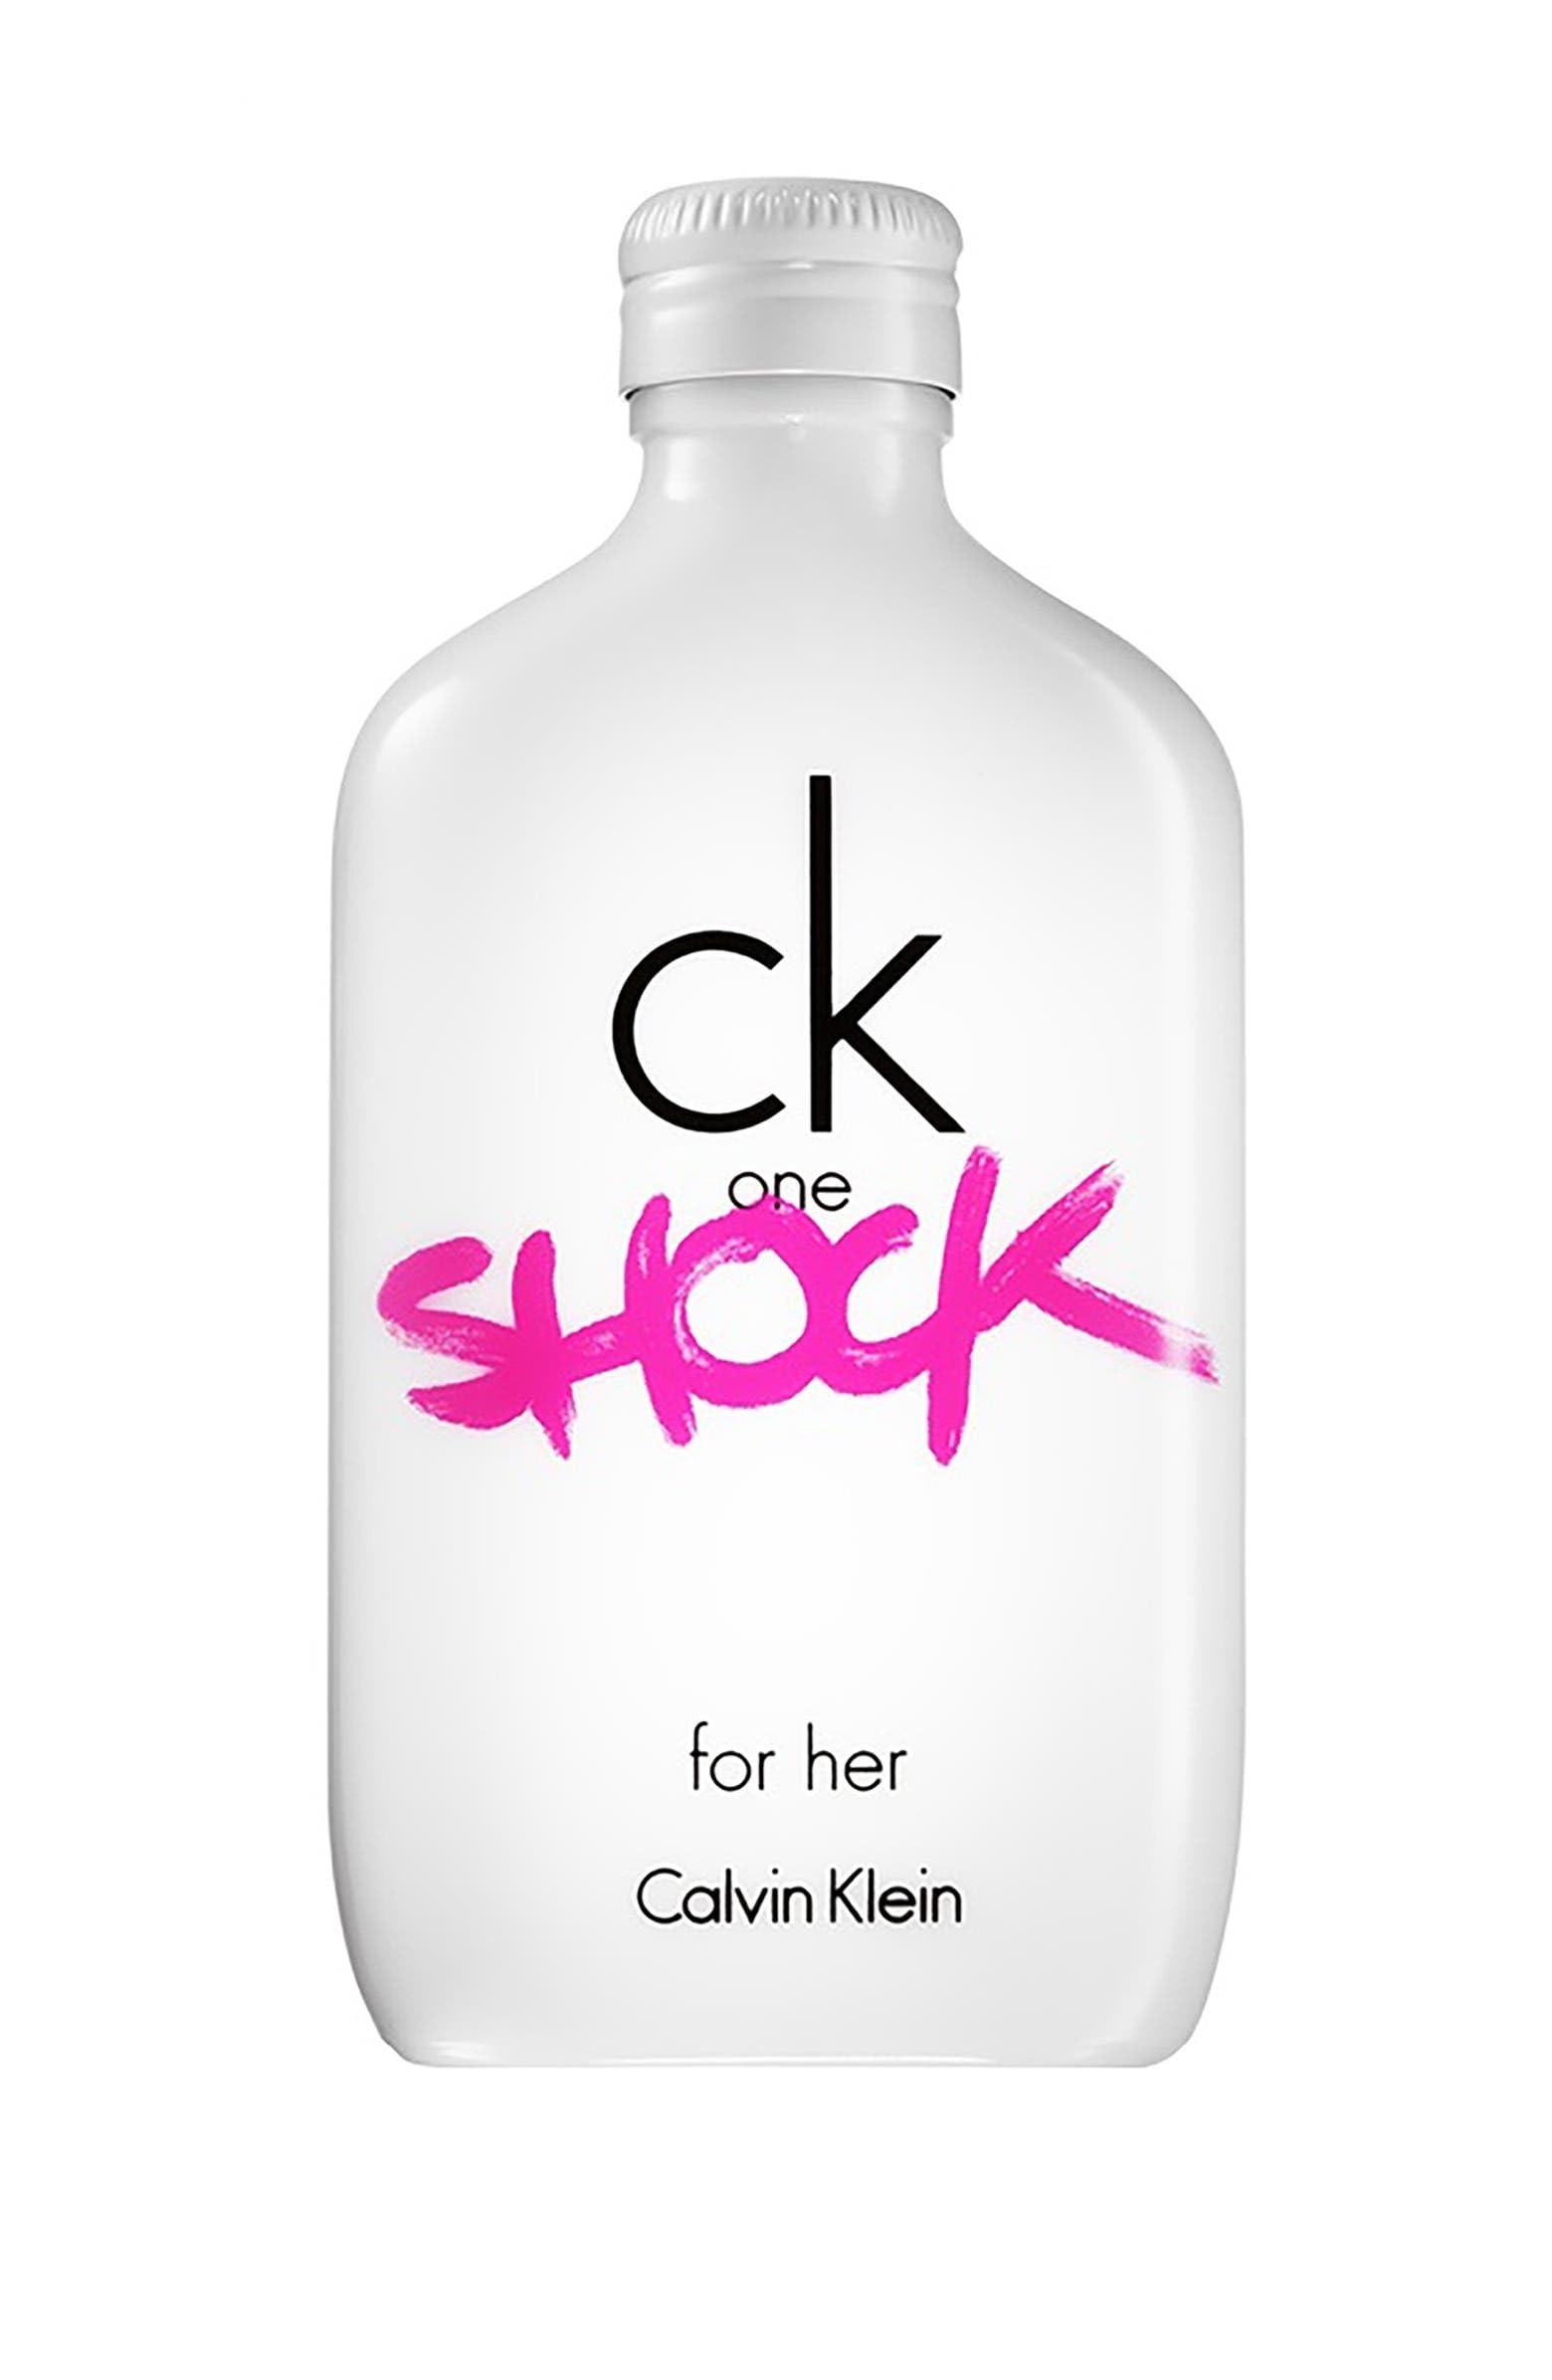 CK One Shock For Her perfume for women Eau de Toilette 6.7 oz-women's fragrances-perfumes for women